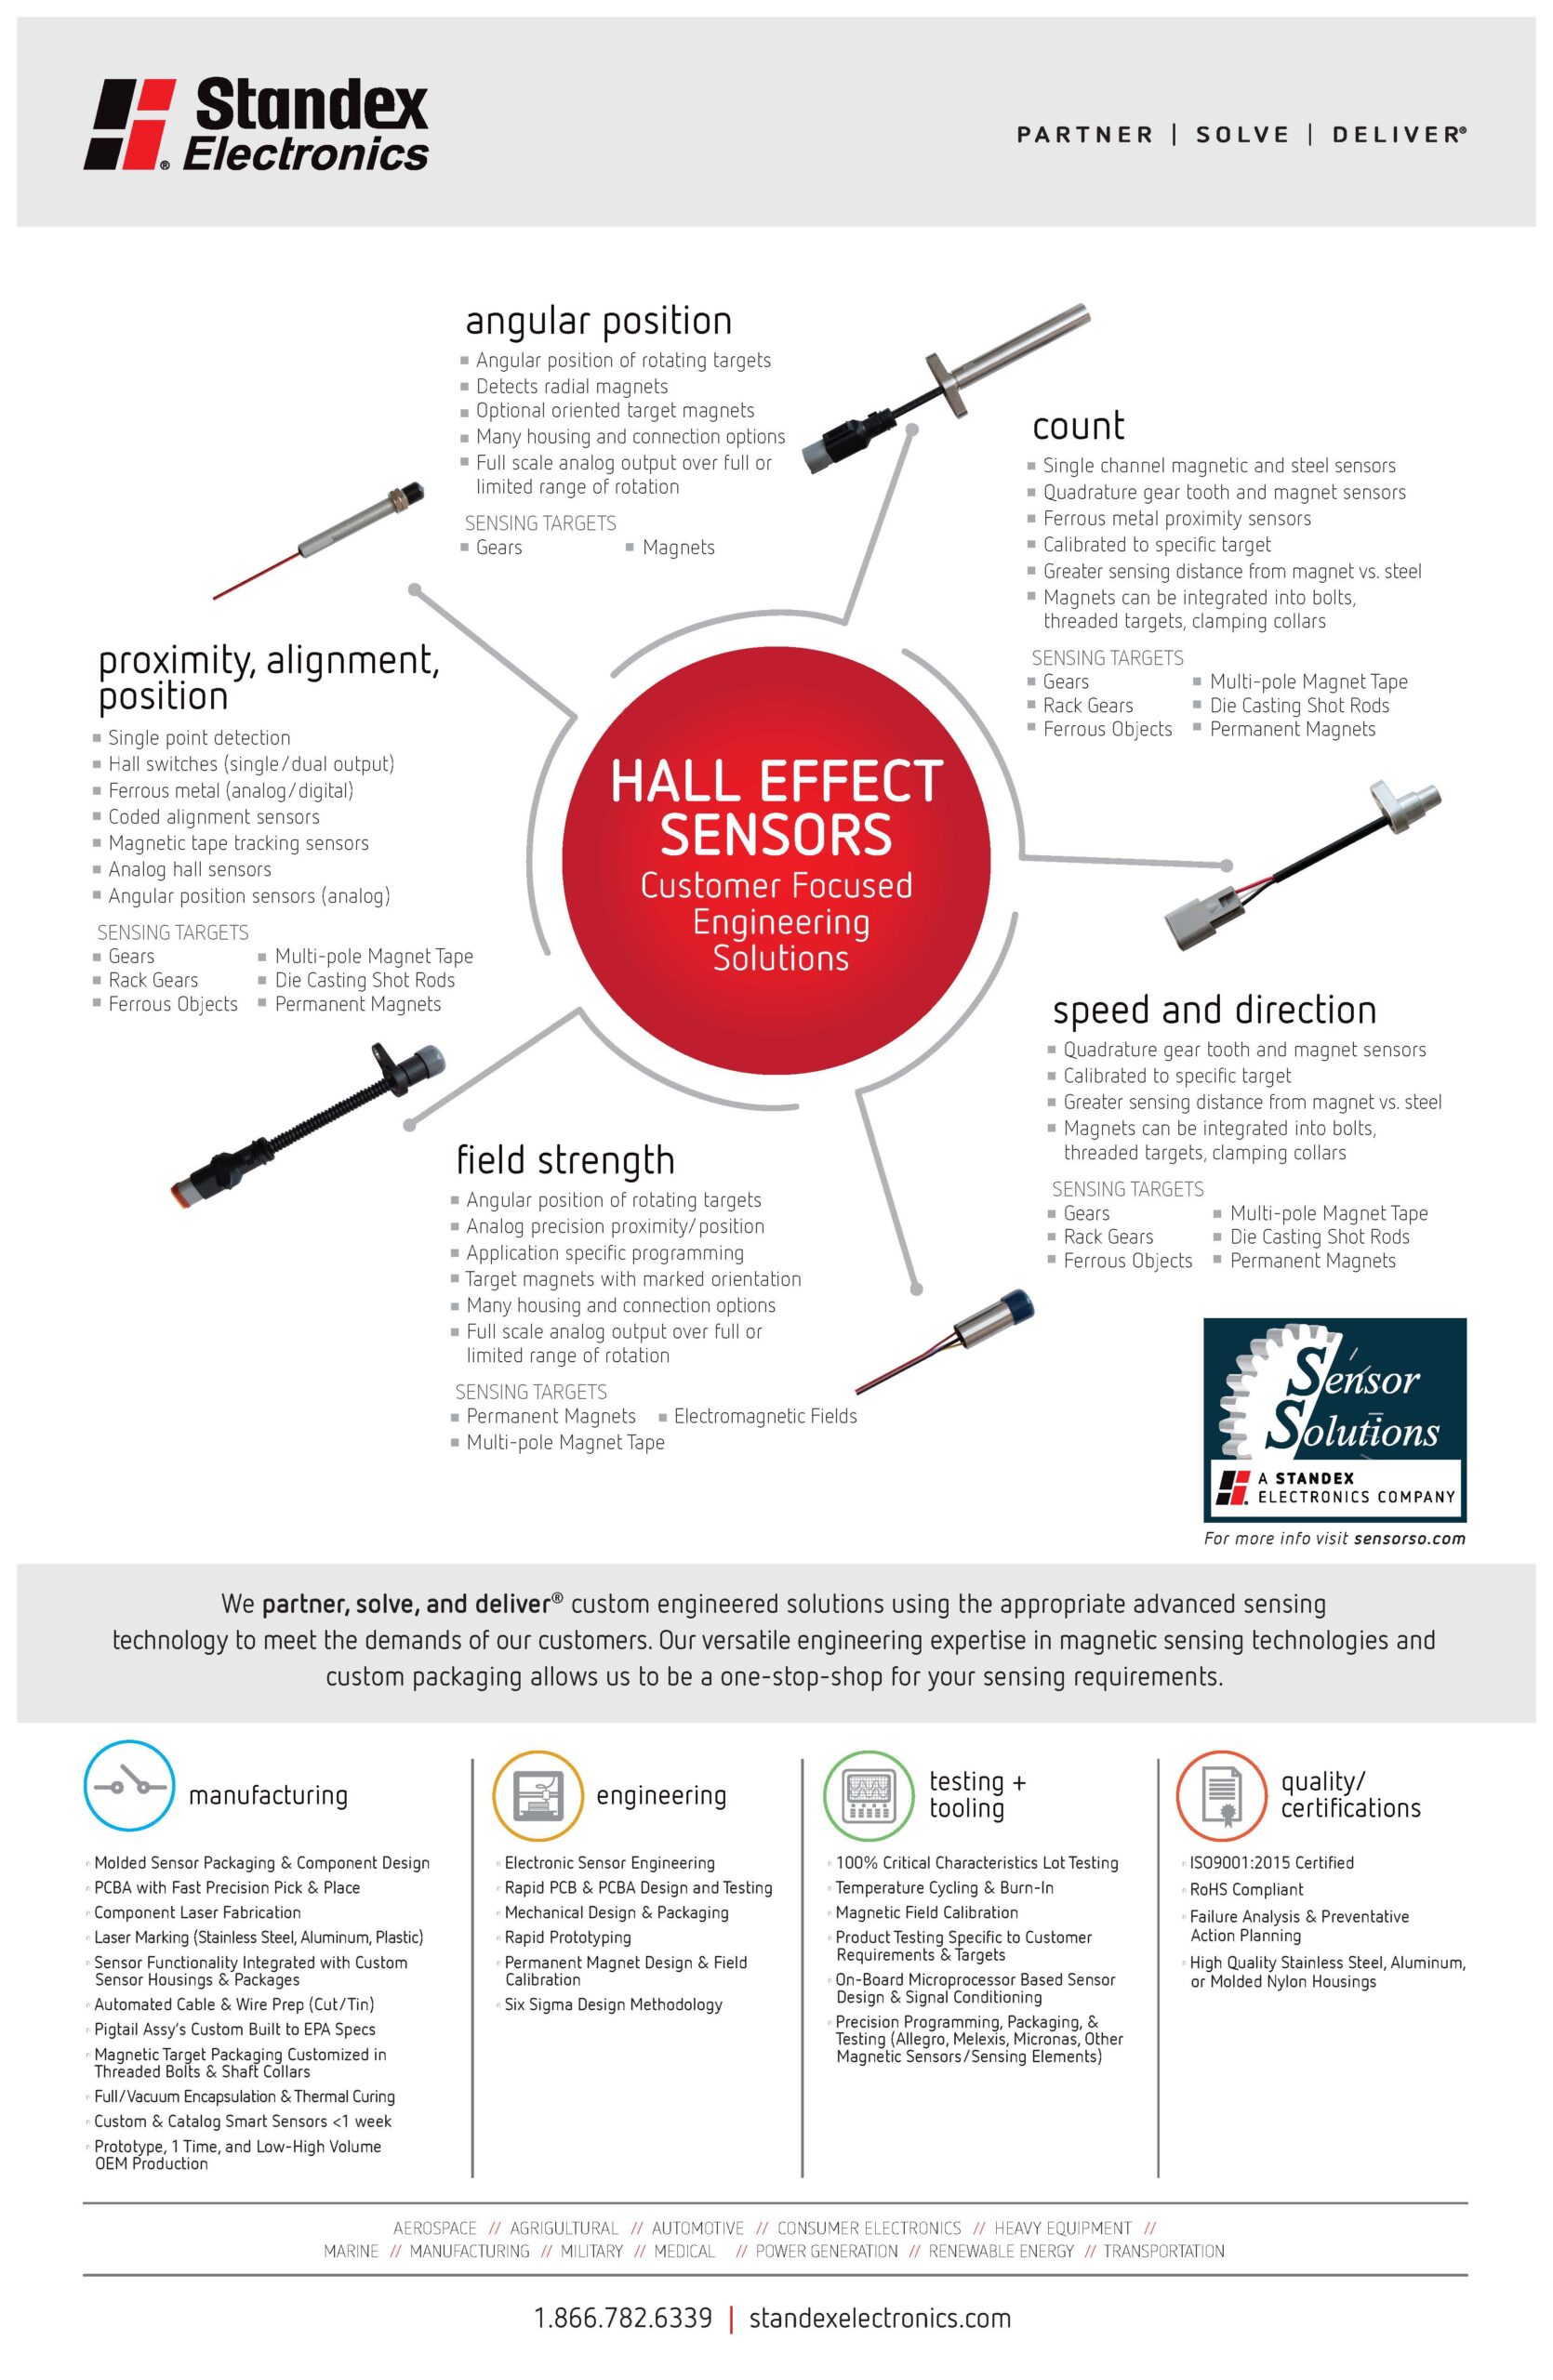 Hall Effect Sensors Infographic